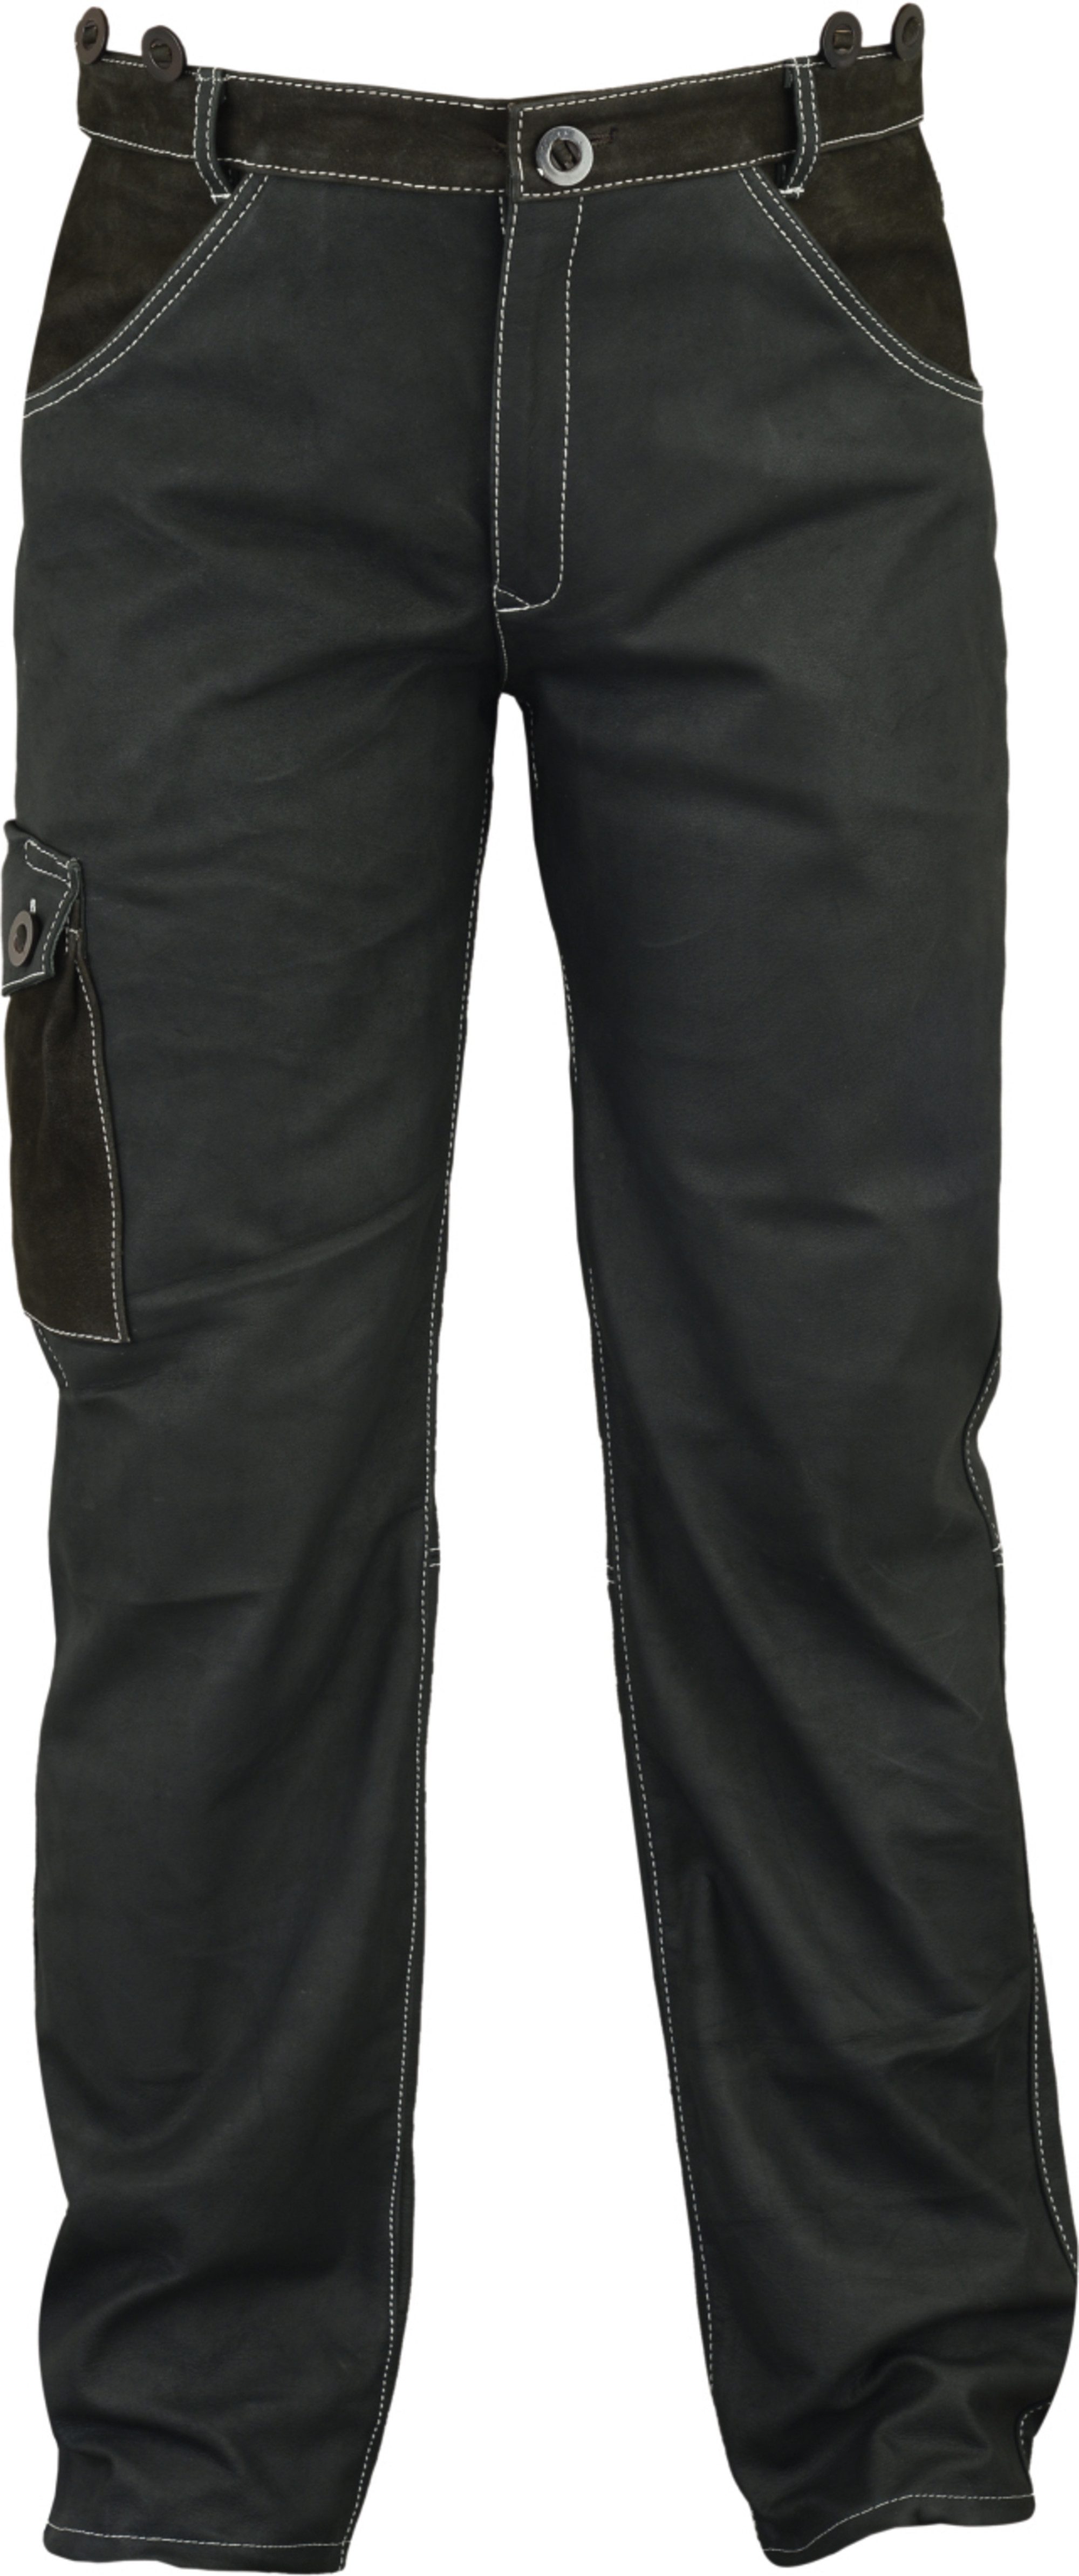 Fuente Leather Wears Bikerhose Lange Lederjeans Herren 5 Pocket Lederhose Nubukhose in Schwarz